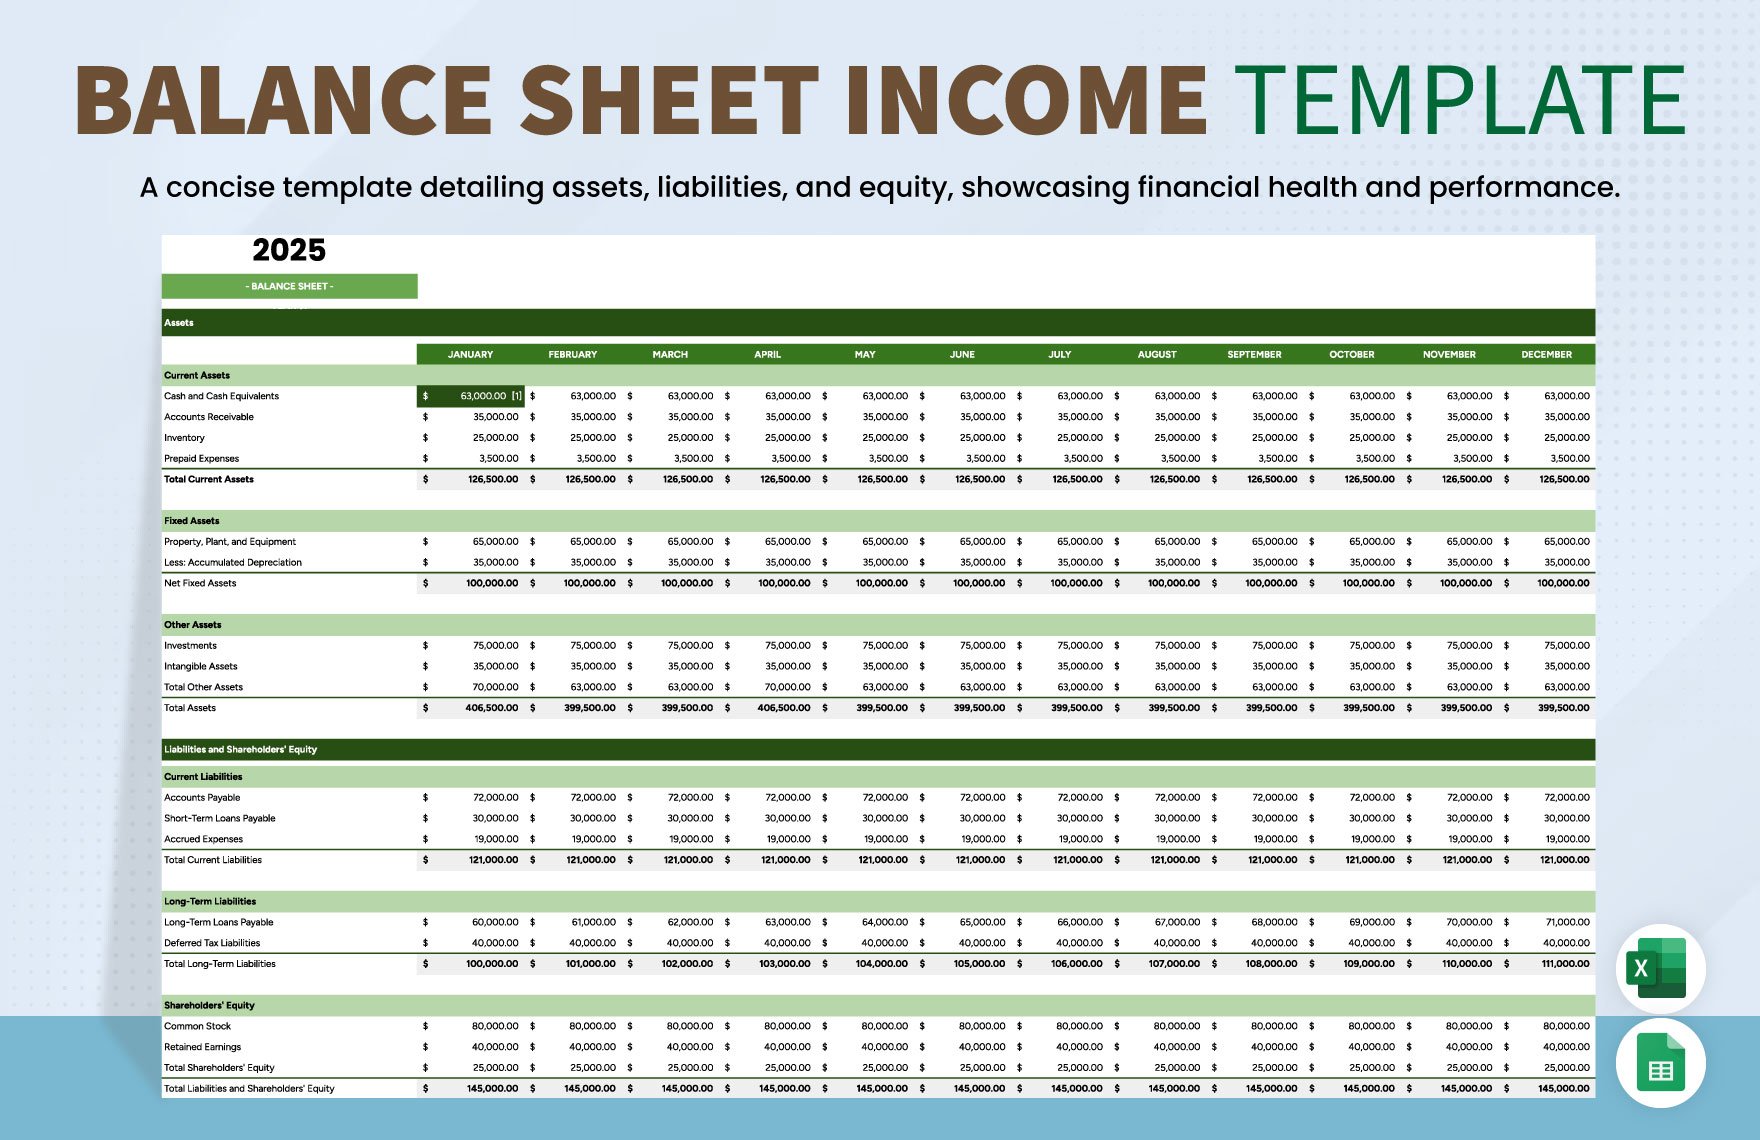 Balance Sheet Income Template